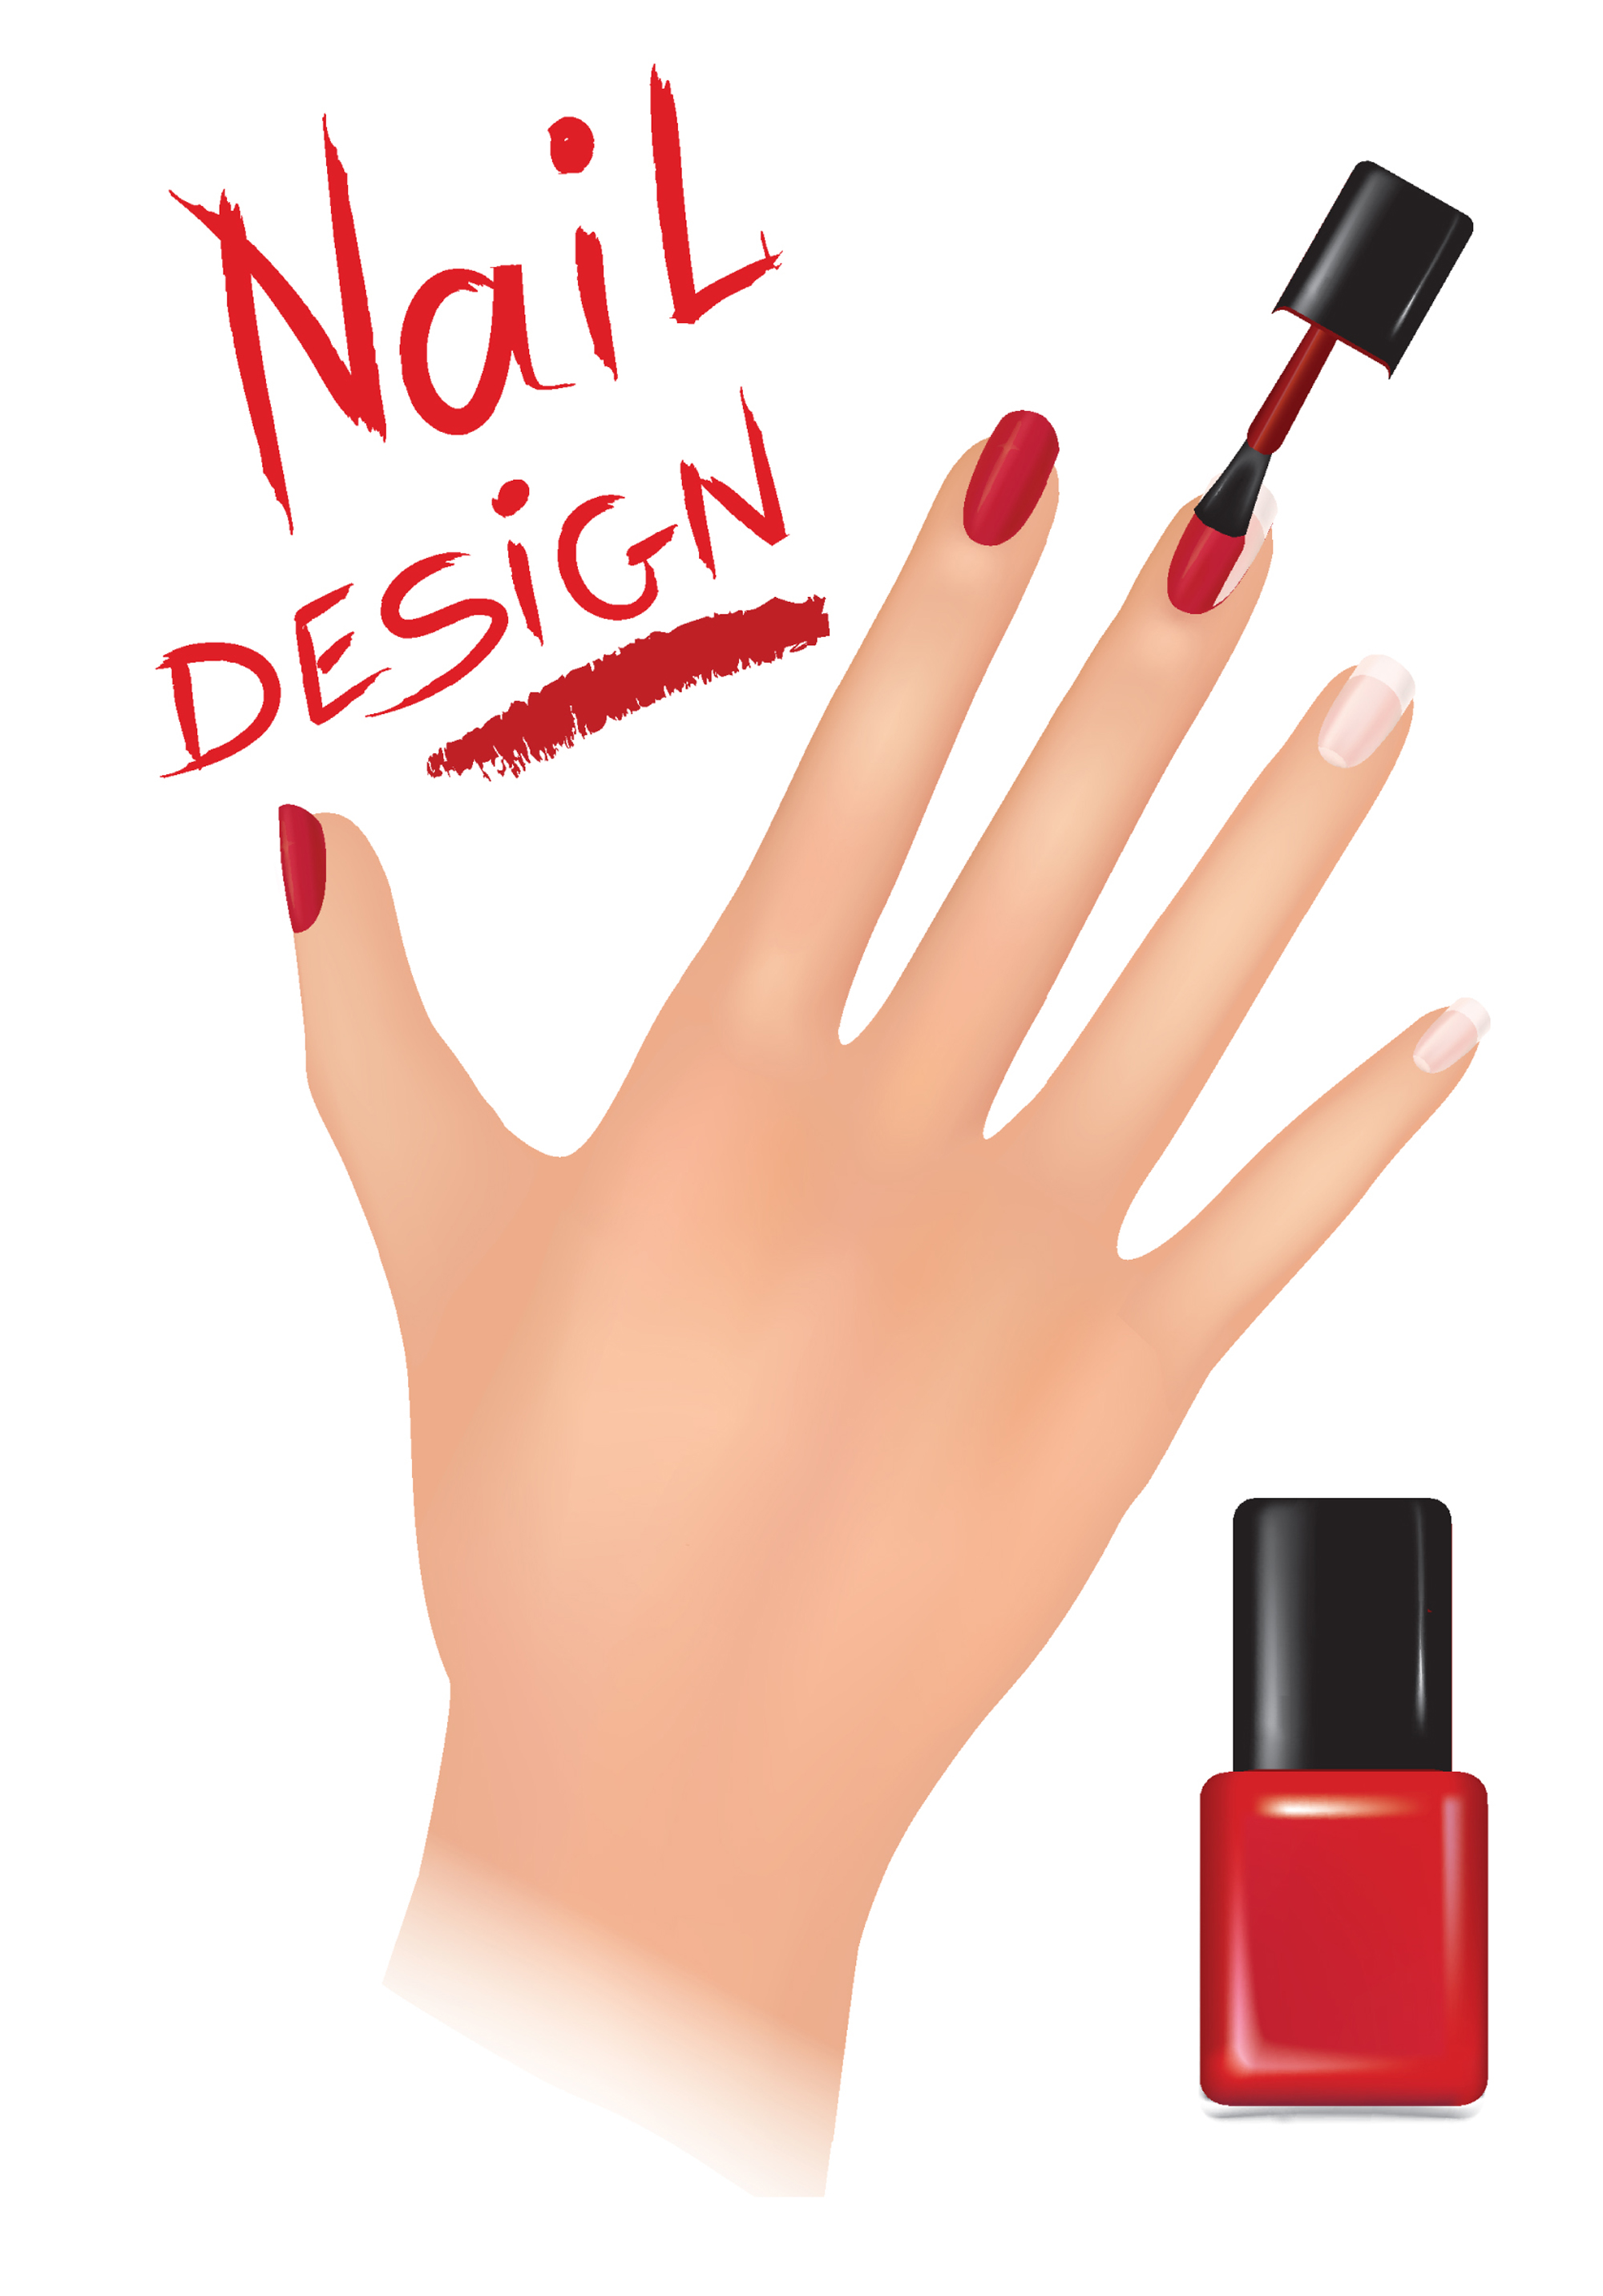 Download Nail polish design. Beauty salon background. Womans hand 530866 - Download Free Vectors, Clipart ...